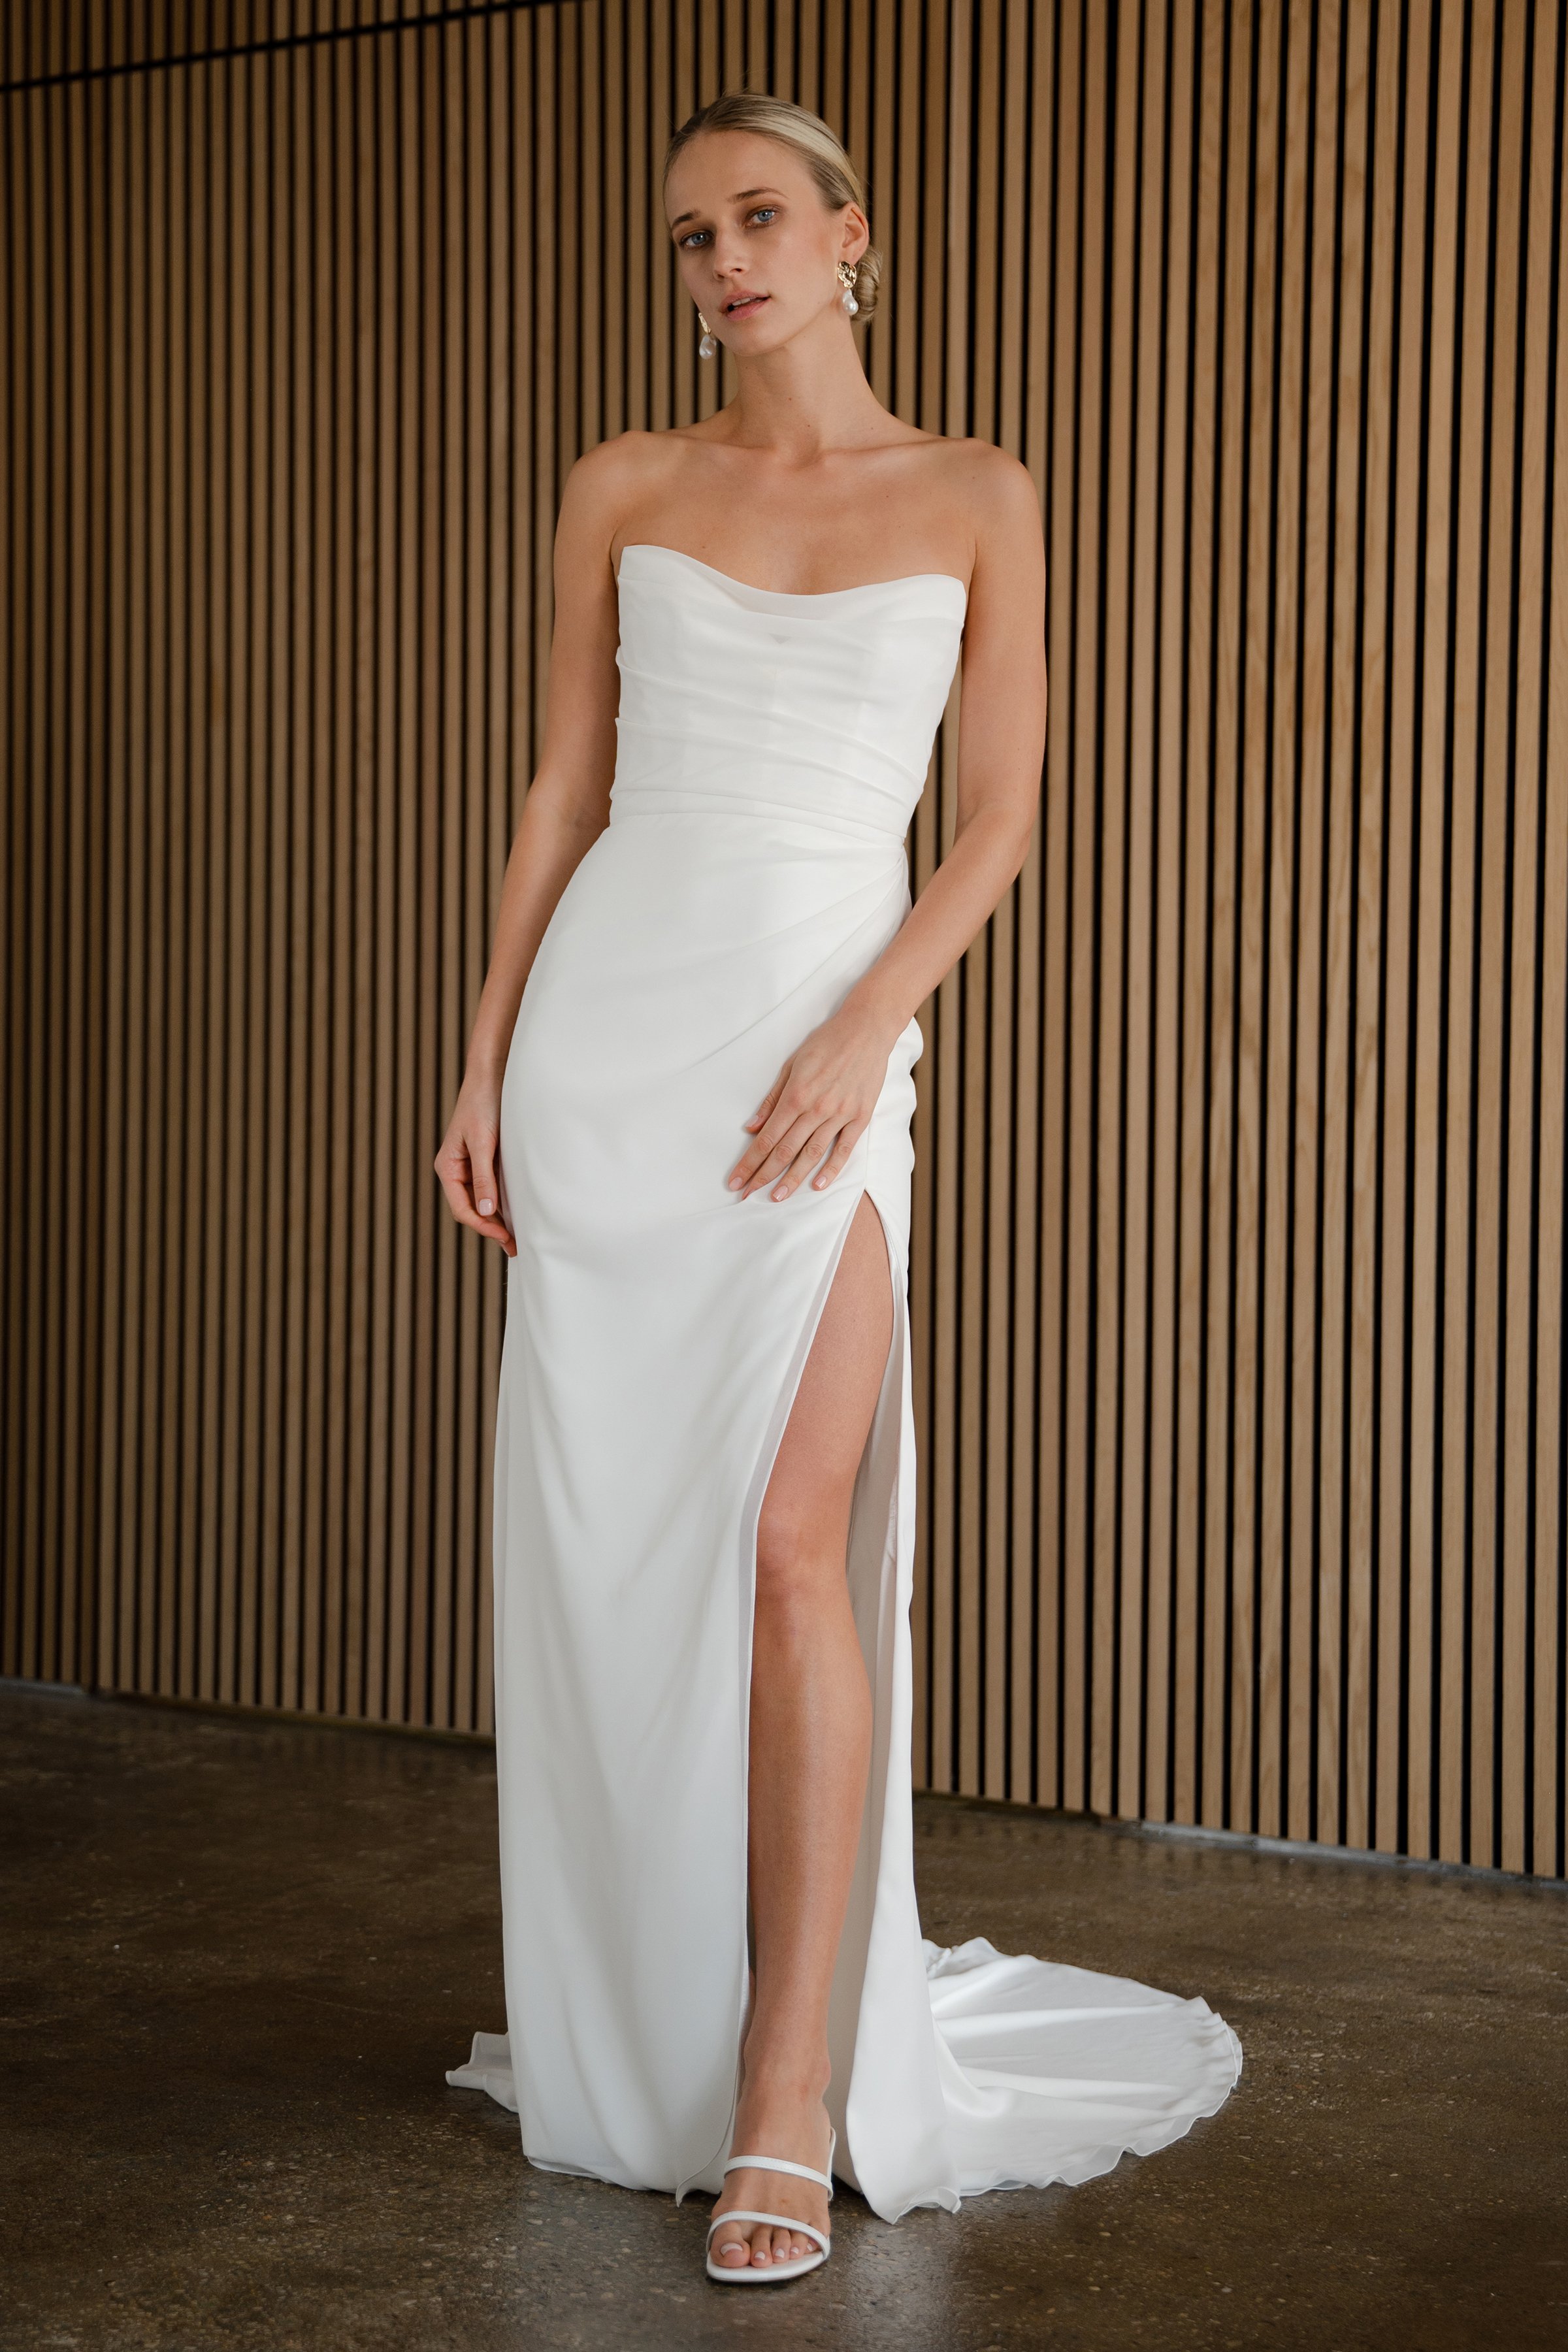 blanc-de-blanc-bridal-boutique-pittsburgh-cleveland-dress-wedding-gown-jenny-yoo-hope-no-sleeve.jpg